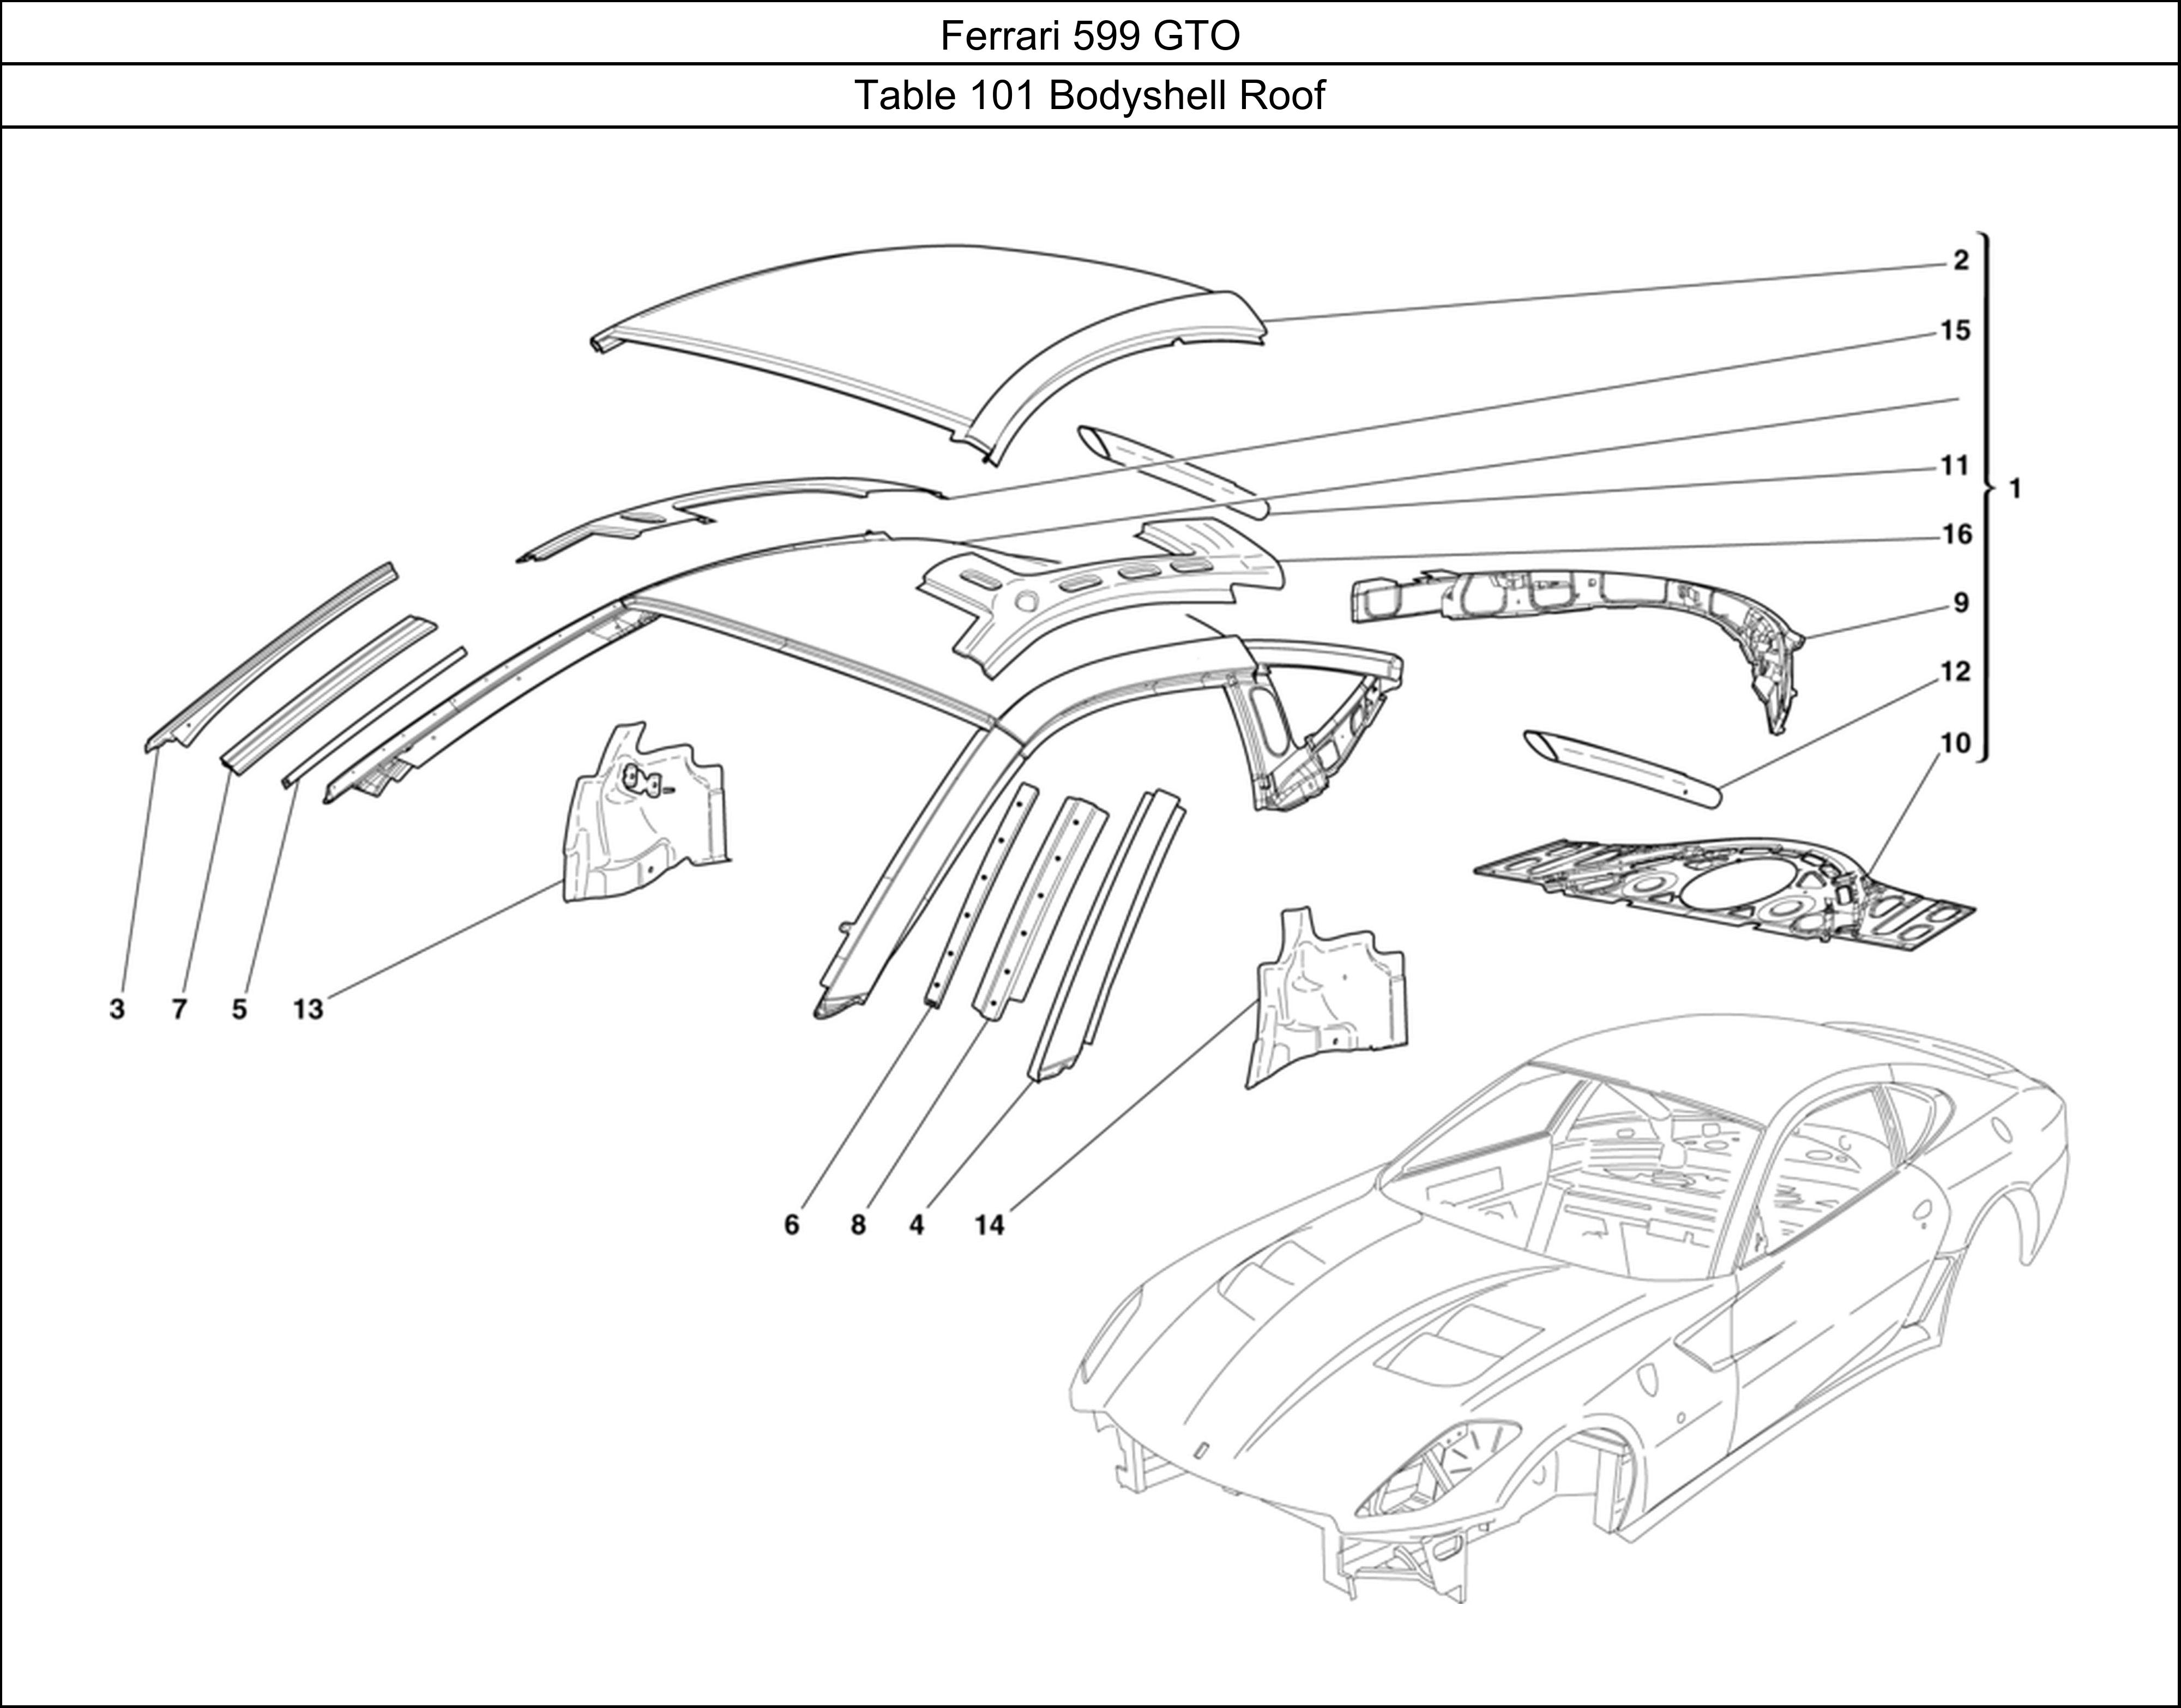 Ferrari Parts Ferrari 599 GTO Table 101 Bodyshell Roof